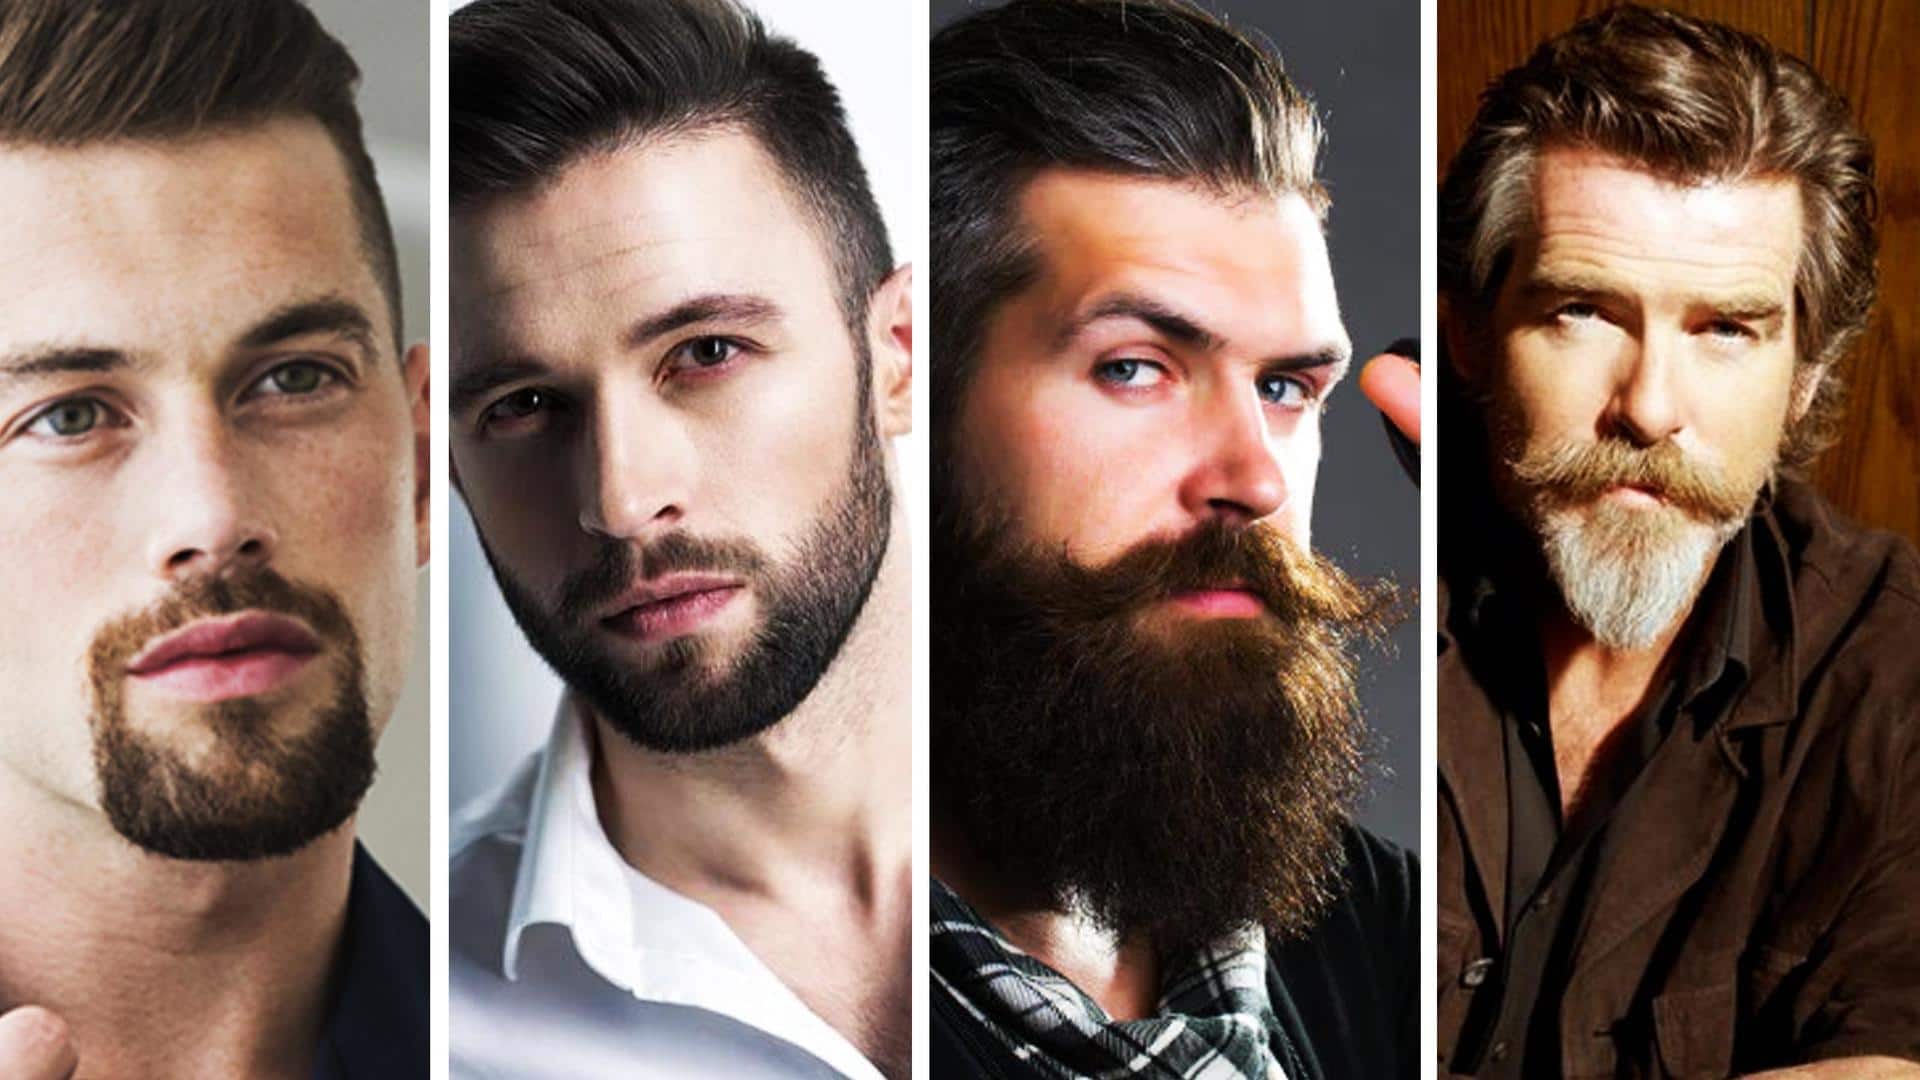 Top 5 beard styles to ace this wedding season